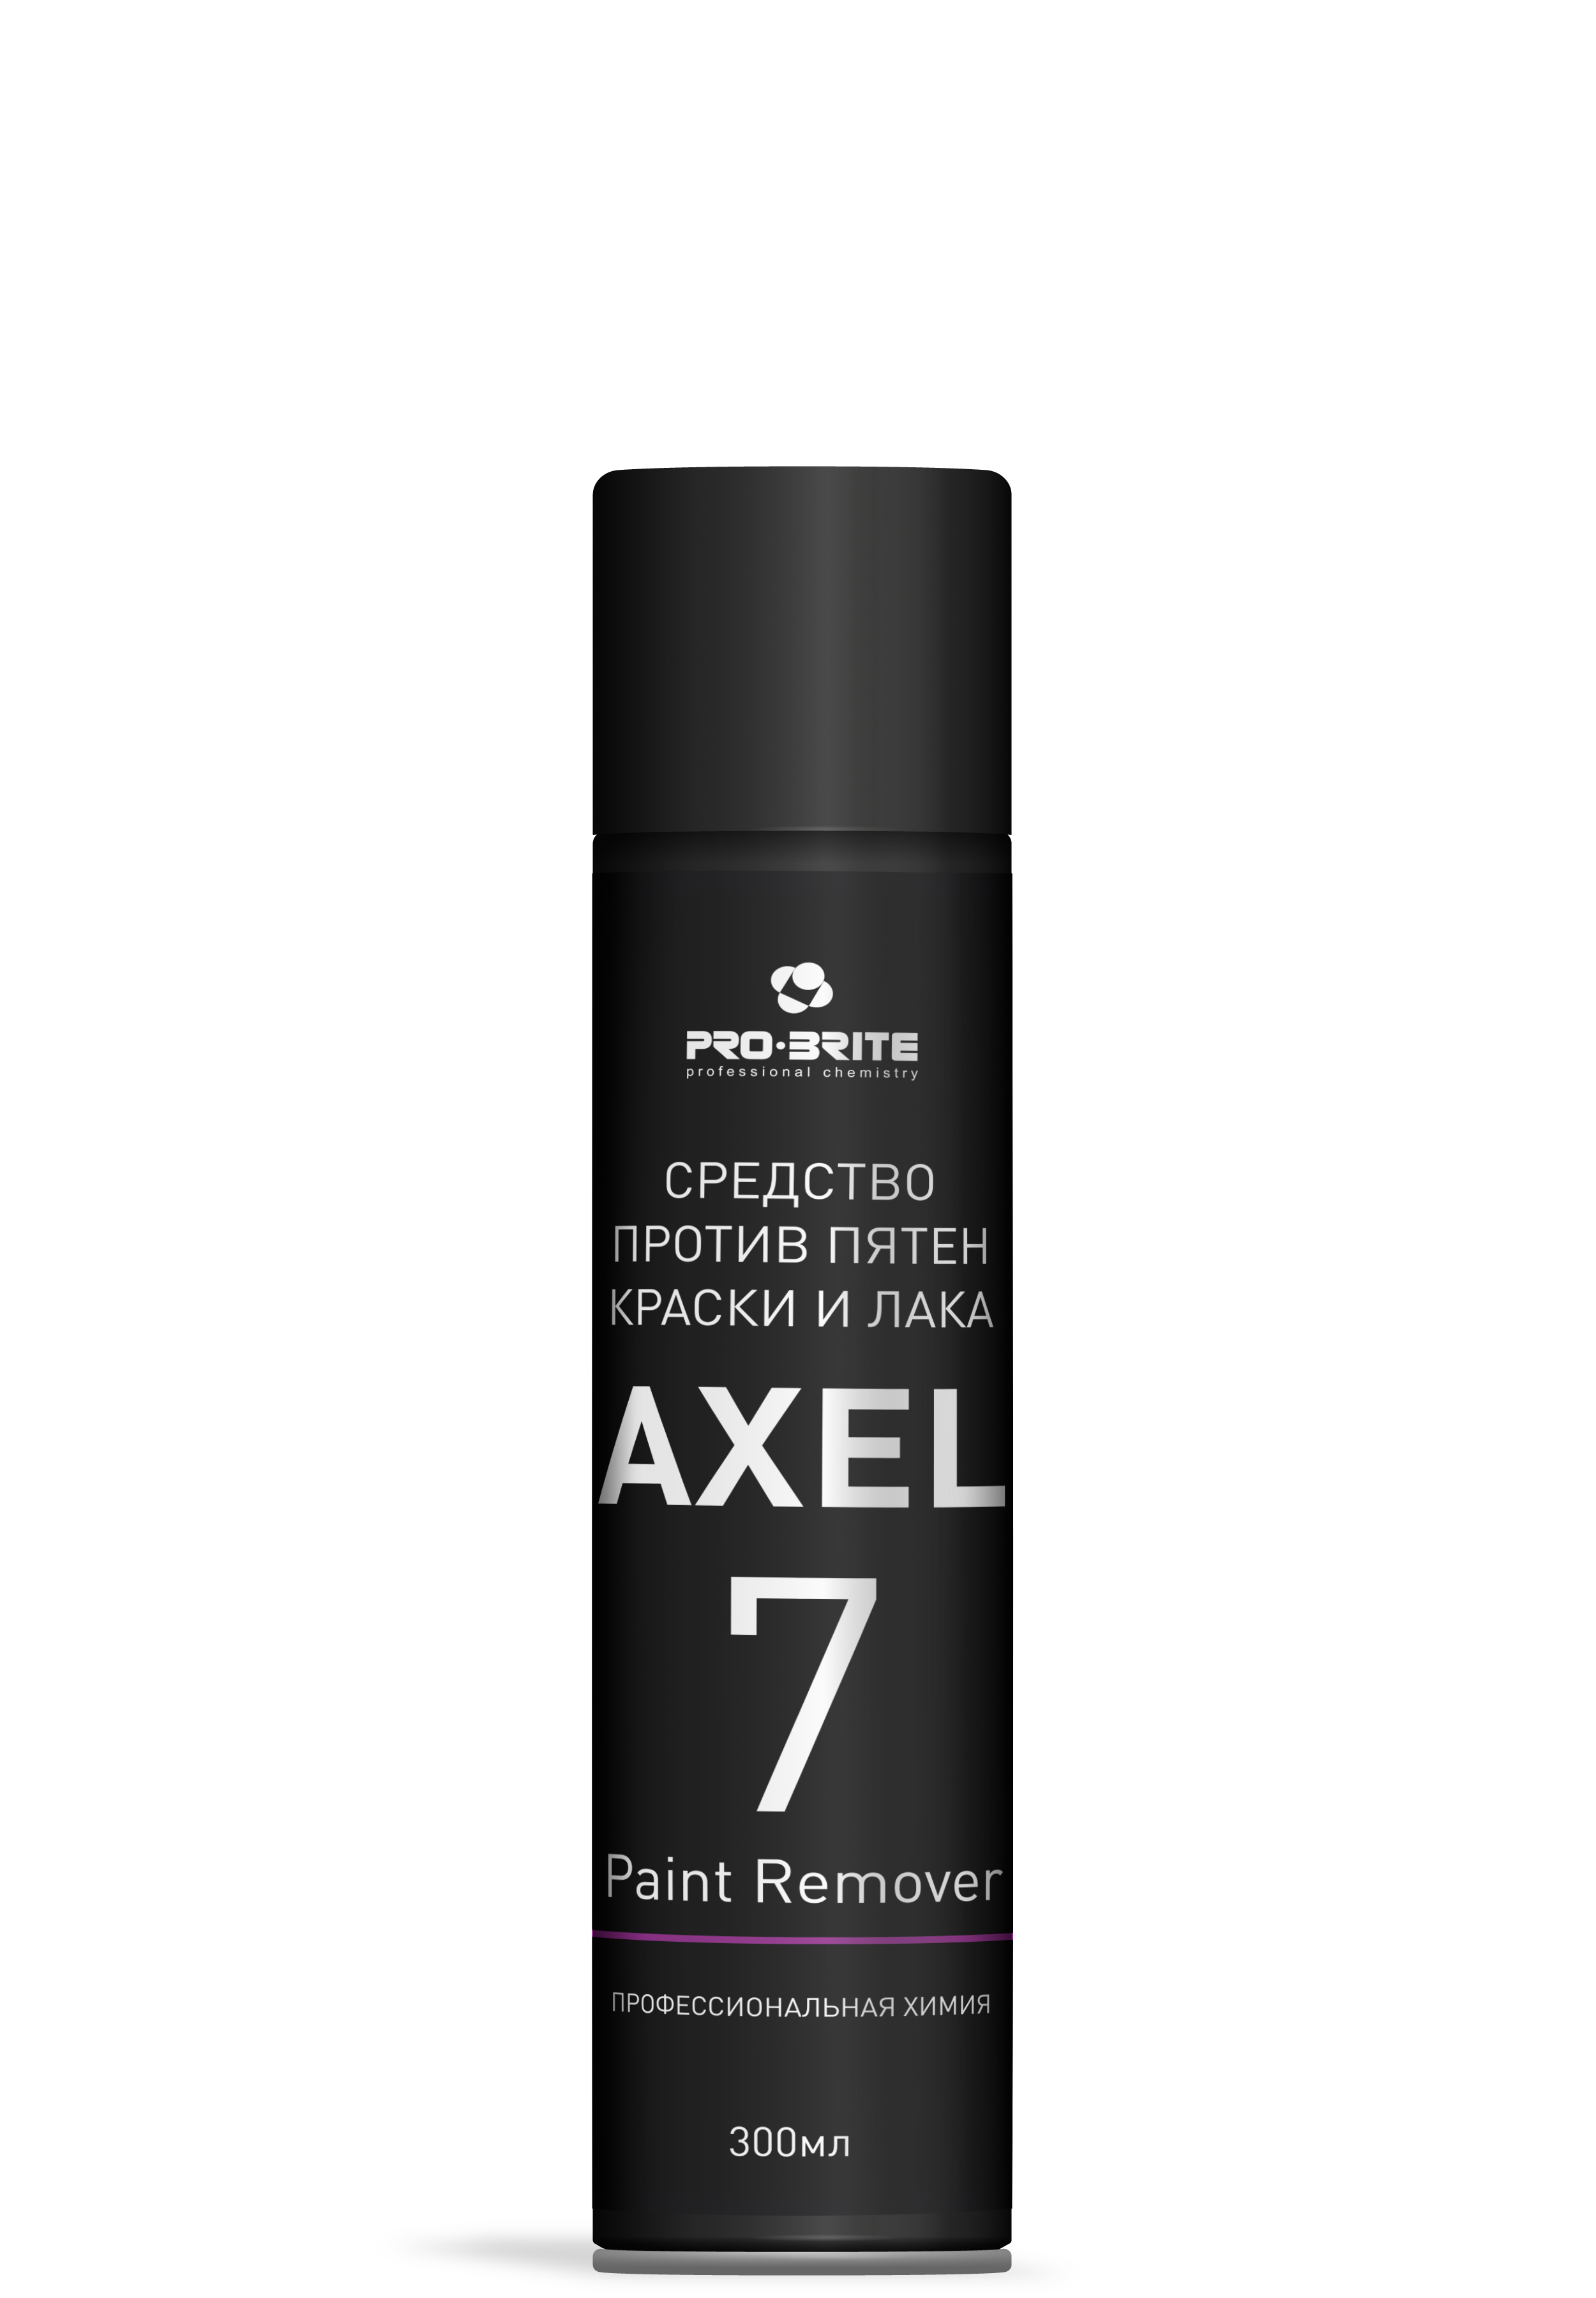 Axel-7 Paint Remover 0,3 л. Средство против пятен краски и лака. PRO-BRITE